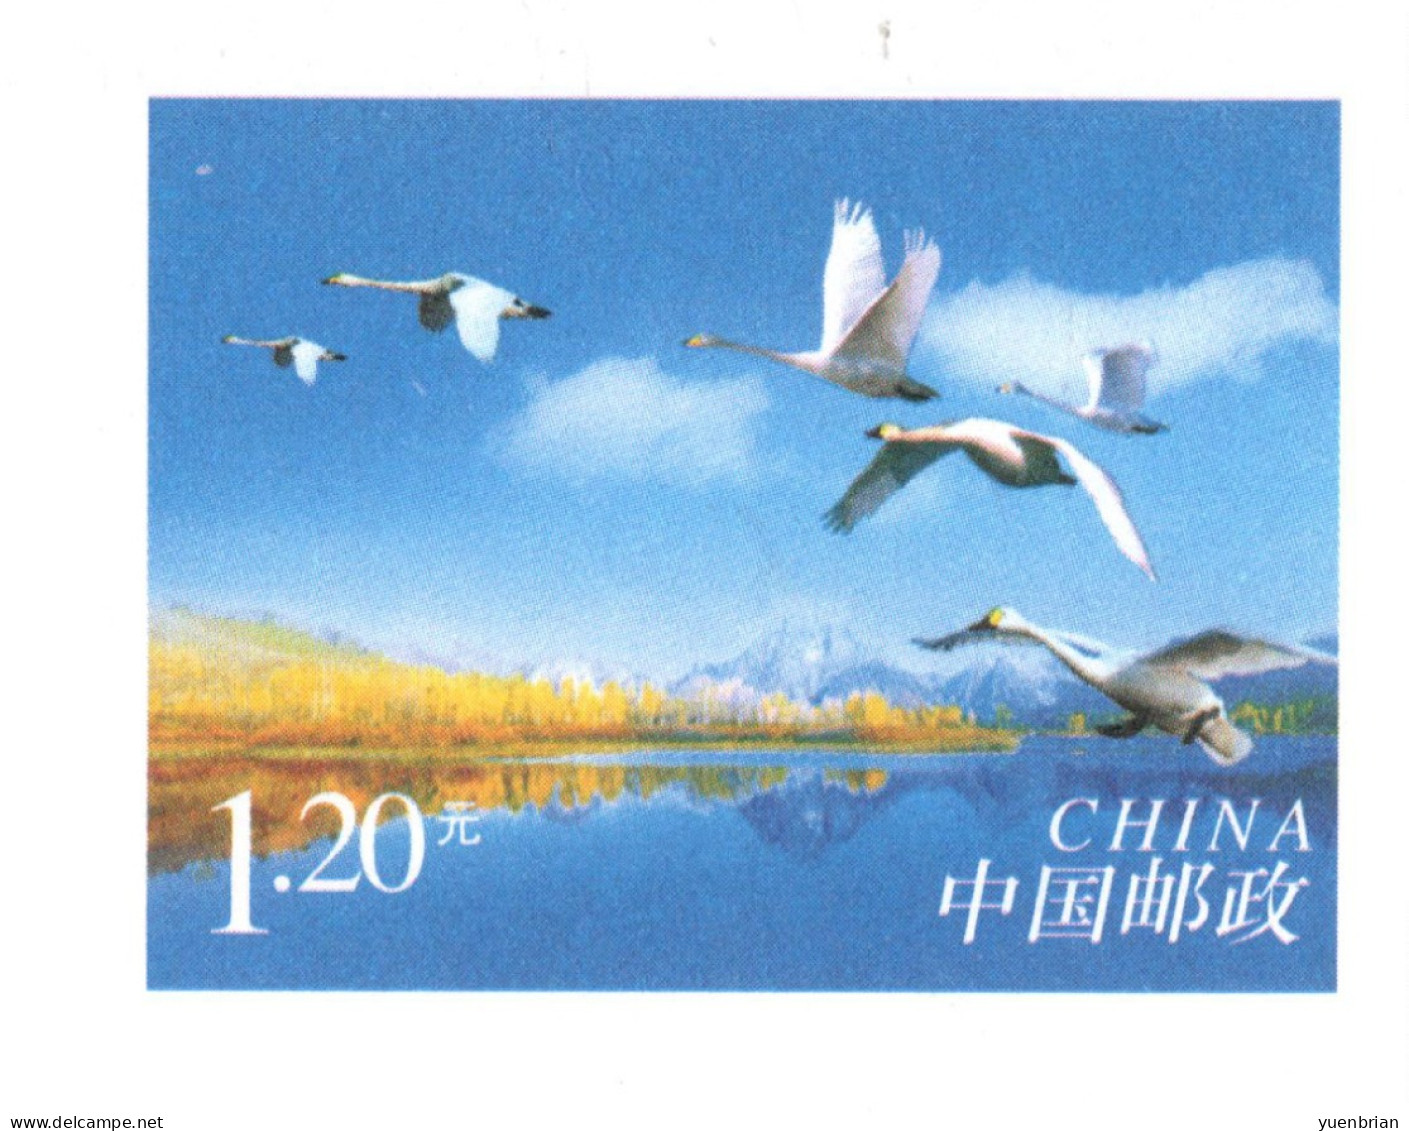 China 2006, Postal Stationary, Pre-Stamped Cover $1.20, MNH** - Schwäne